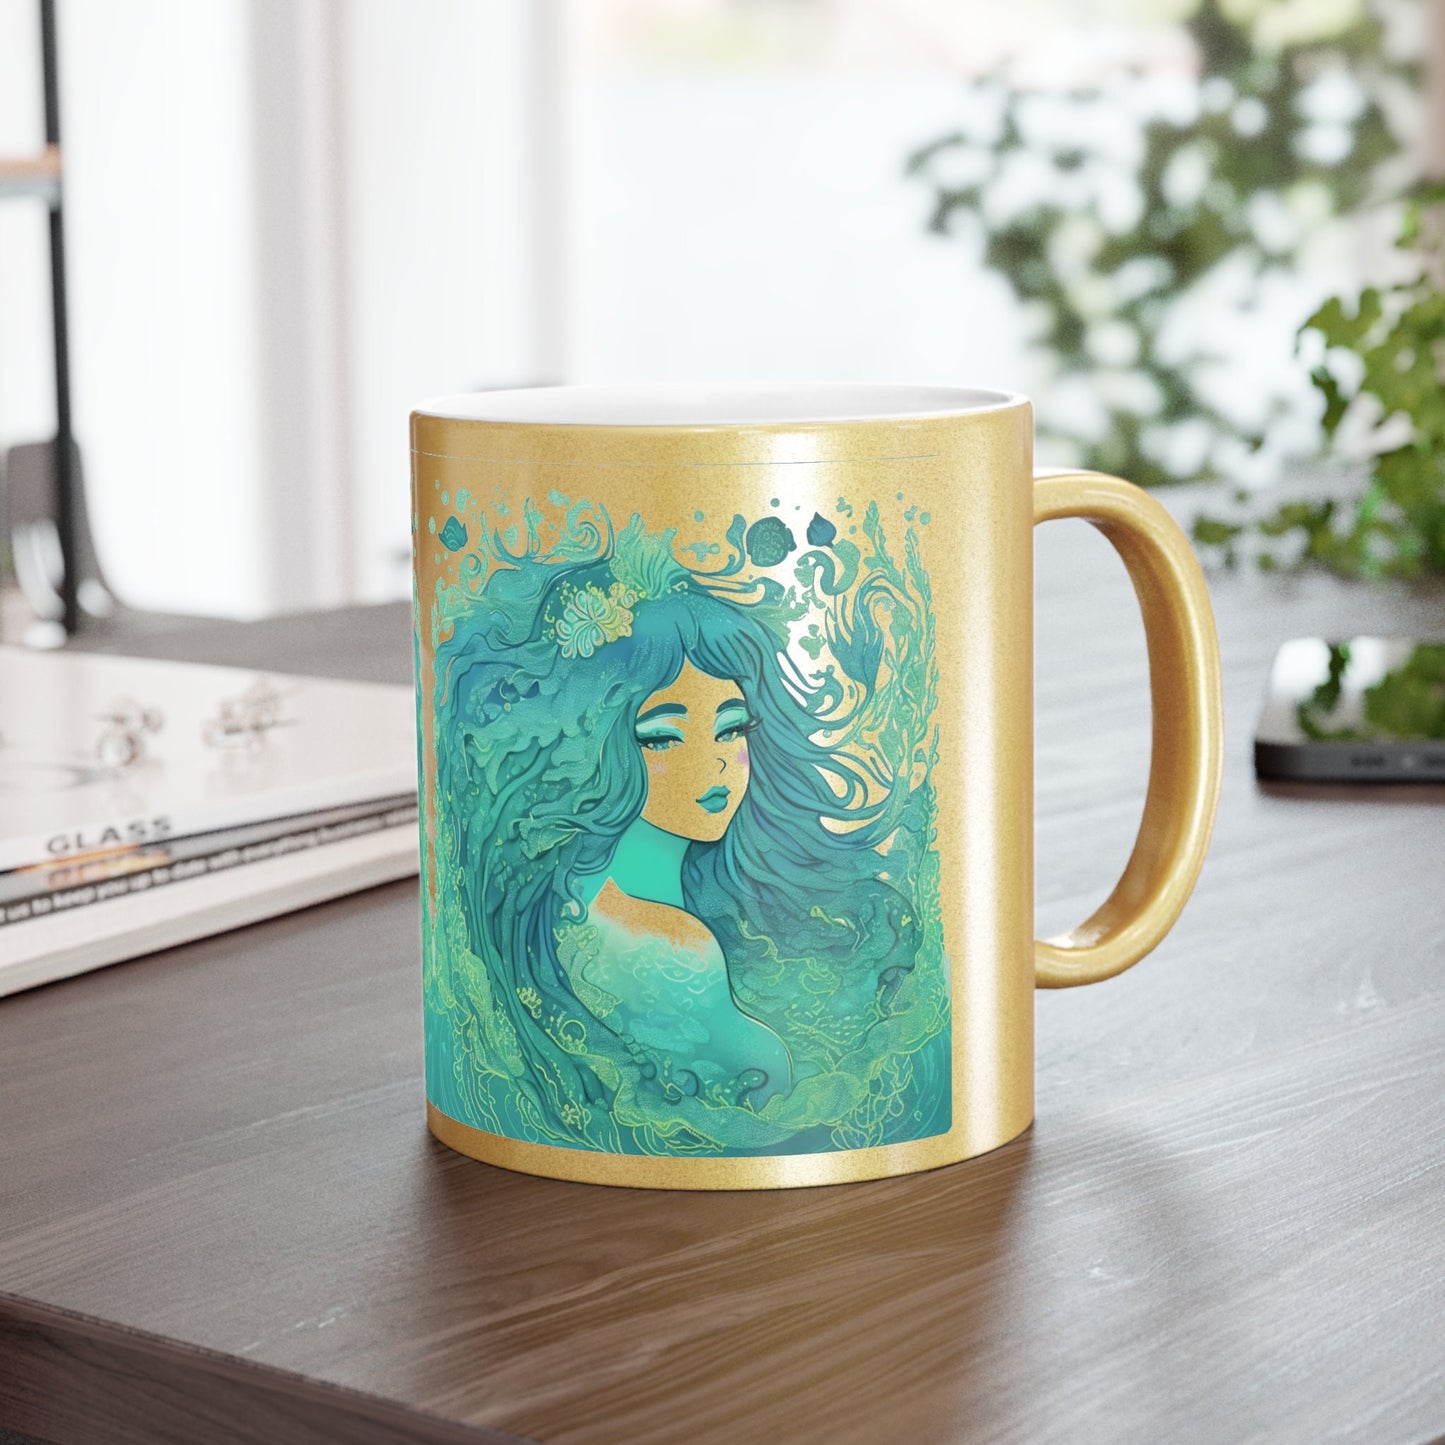 Metallic Mermaid Mug Gift Gold Mermaid Silver Mug Blue Mermaid Background Mug Sirens Mermaids Gift Art Nouveau Mermaid Aesthetic Gift Mug #4